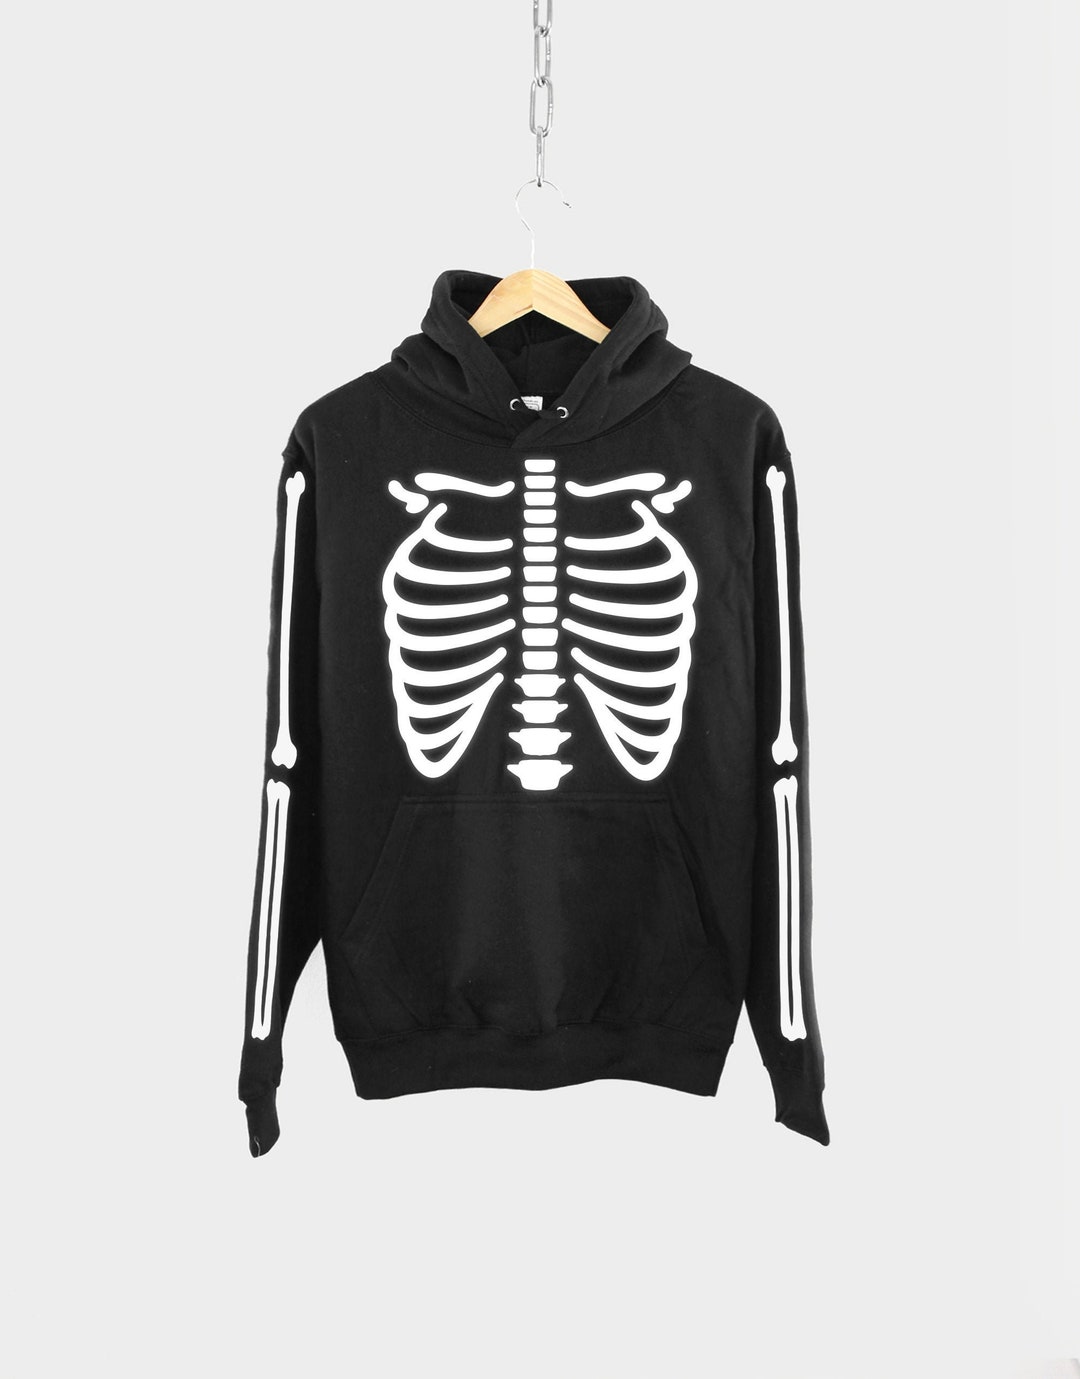 Free Halloween Roblox Clothing Skeleton Sweater Design Template